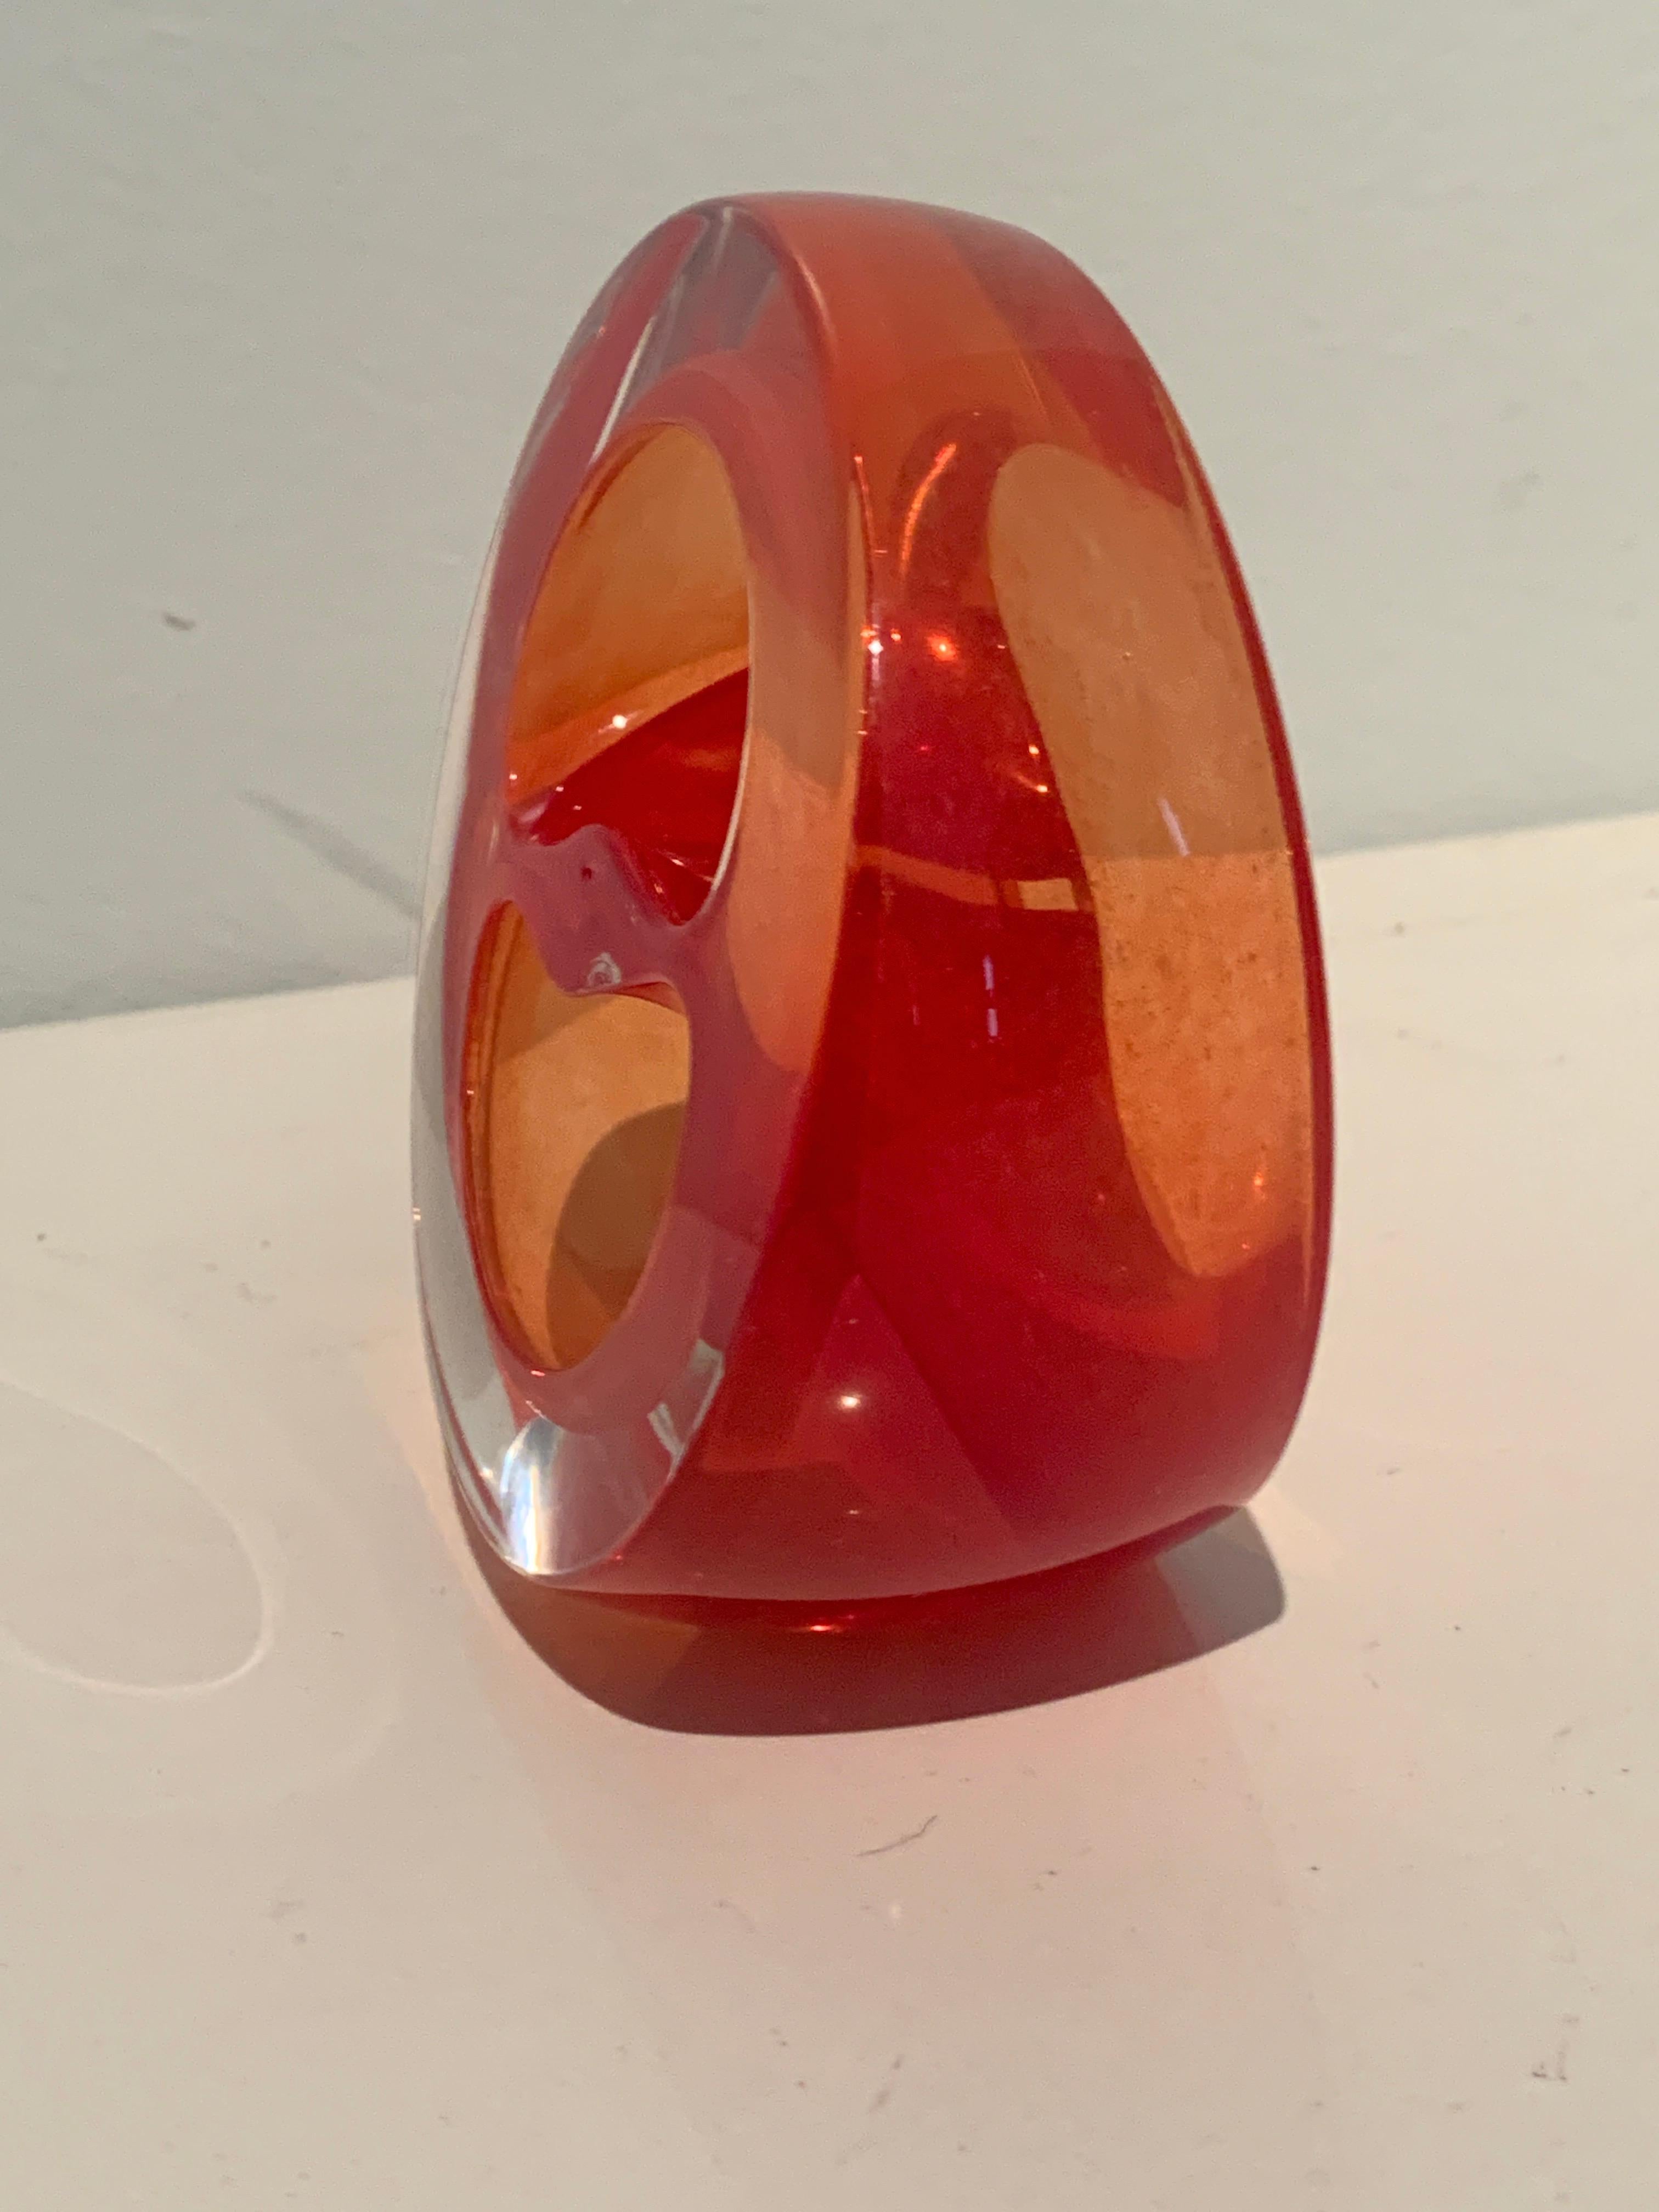 Anglais Teign Valley Red Art Glass Sculpture Paper Weight Bookend Bon état - En vente à Los Angeles, CA